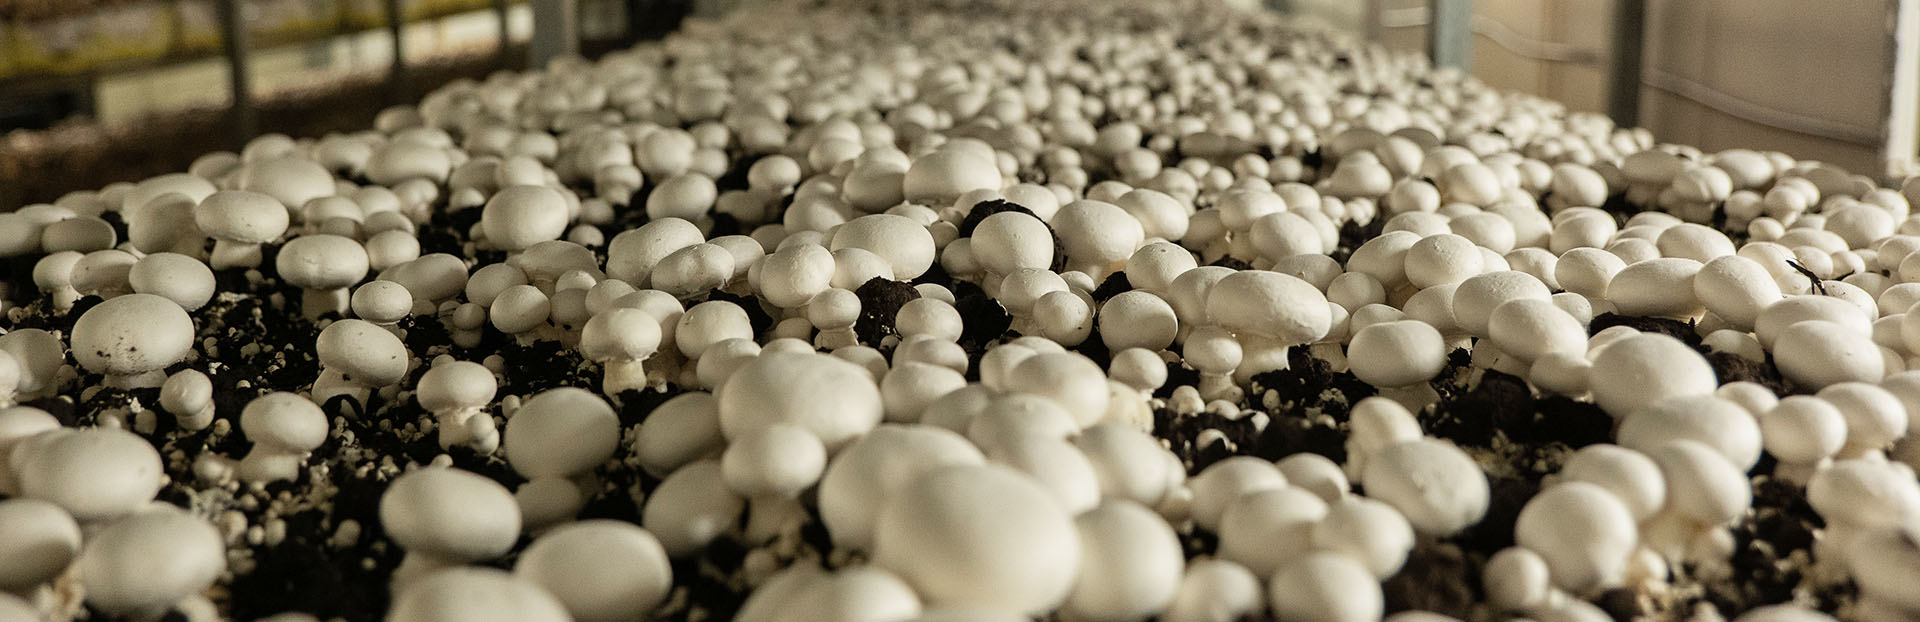 Mushroom's Growing